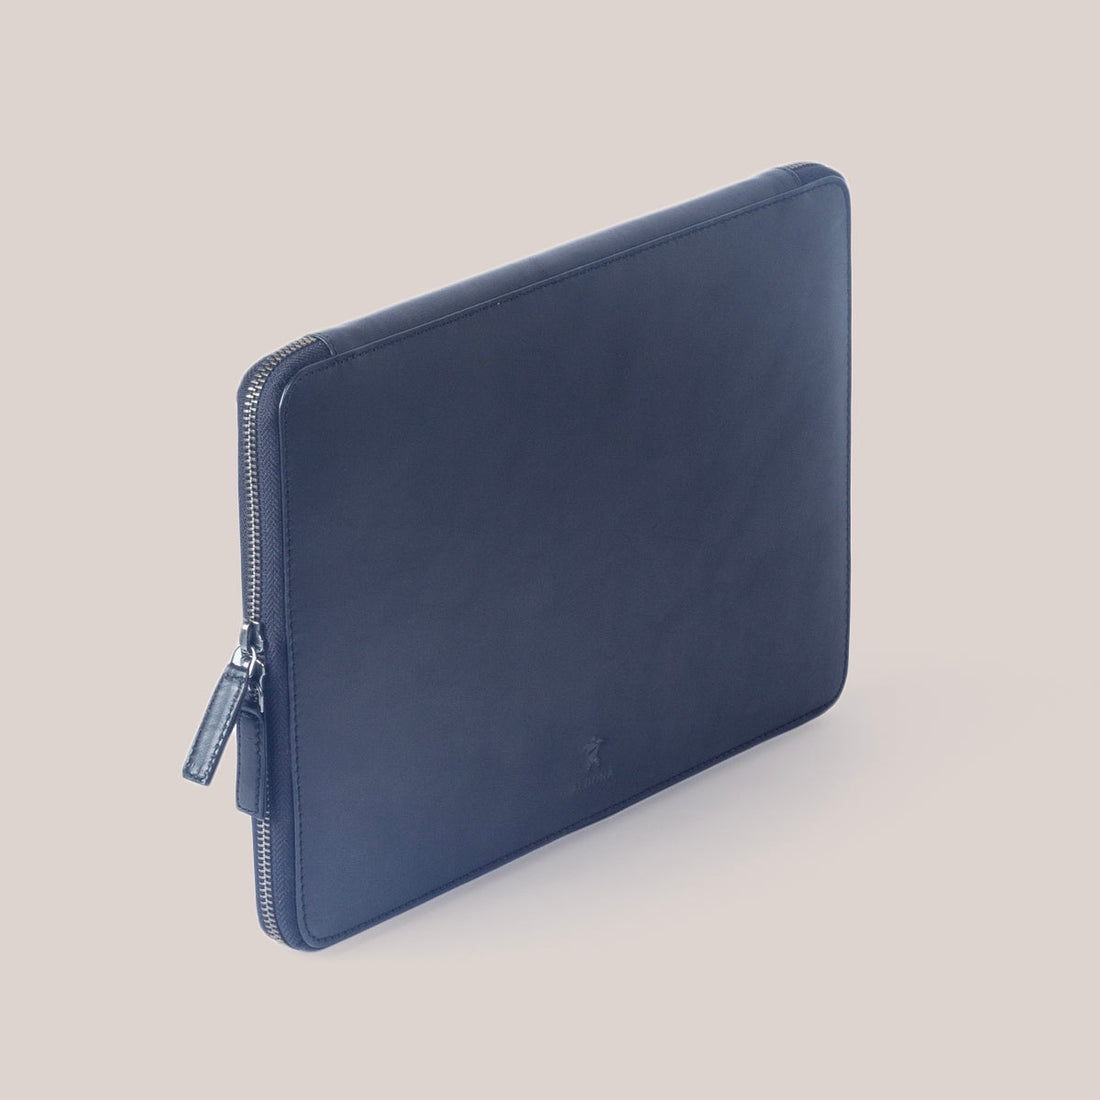 DELL XPS 17 Zippered Laptop Case - Felt and Tan Crunch